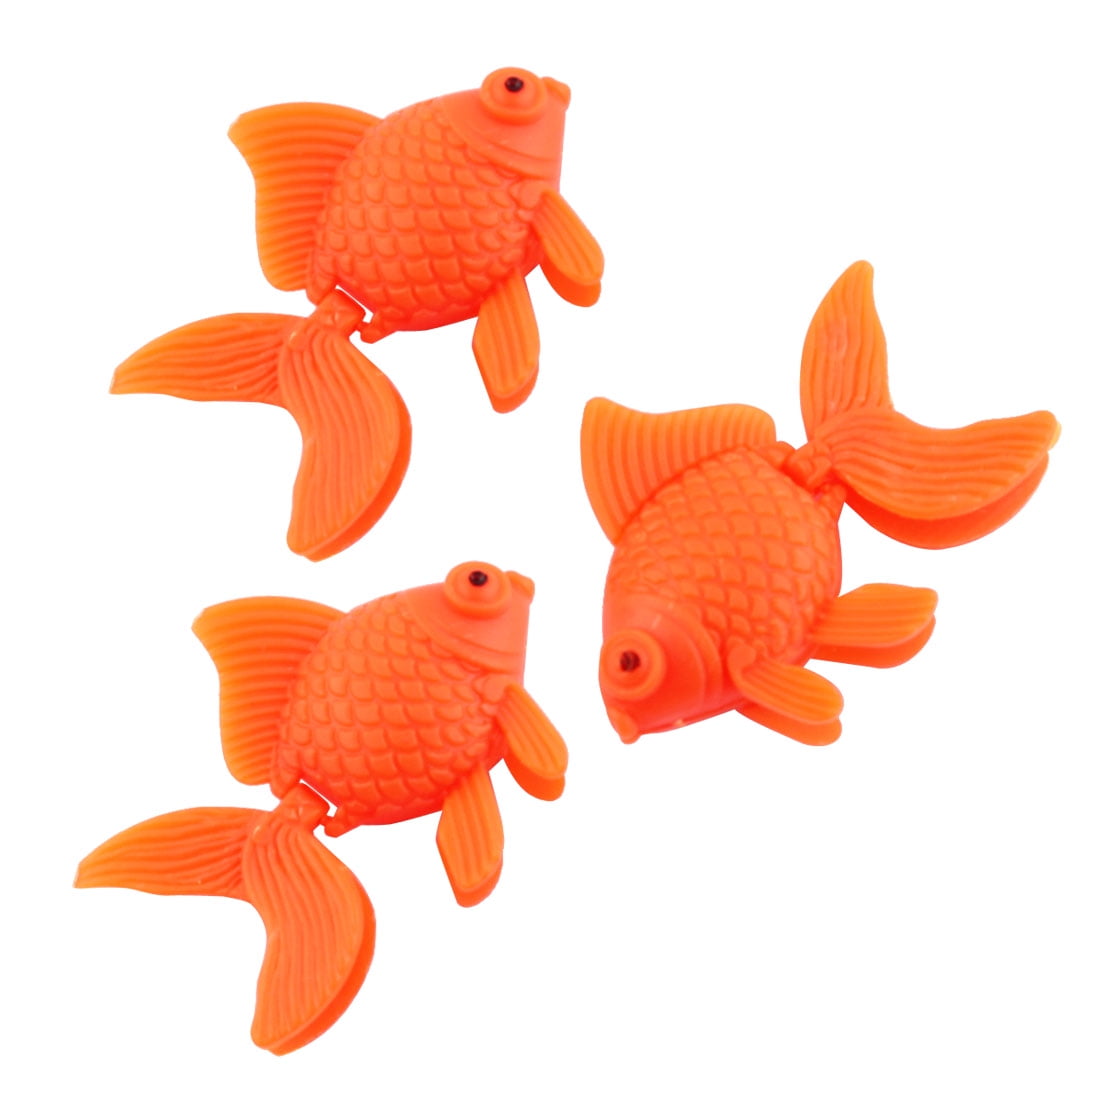 Magic&shell Plastic Gold Fish 10PCS 2 Inches Long Orange Color Artificial Floating Goldfish Ornament Fish for Aquarium Fish Bowl Tank Ornament 